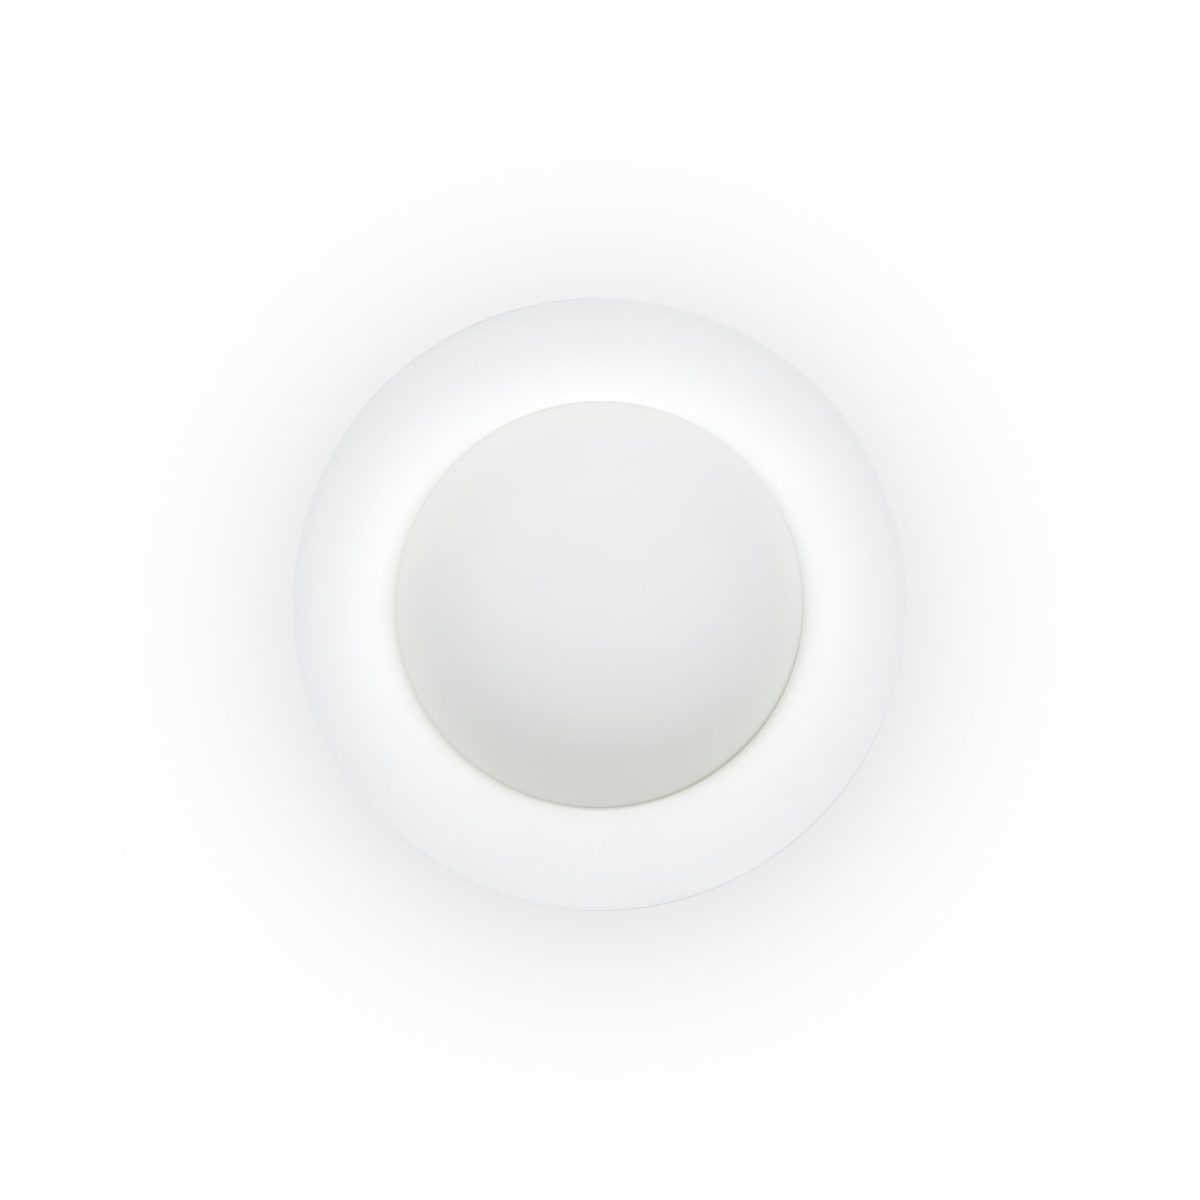 SIDE LED Aplique de Faro. Medidas: Ø 450 x L 450 x A 120 x F 450 mm. Color: Blanco